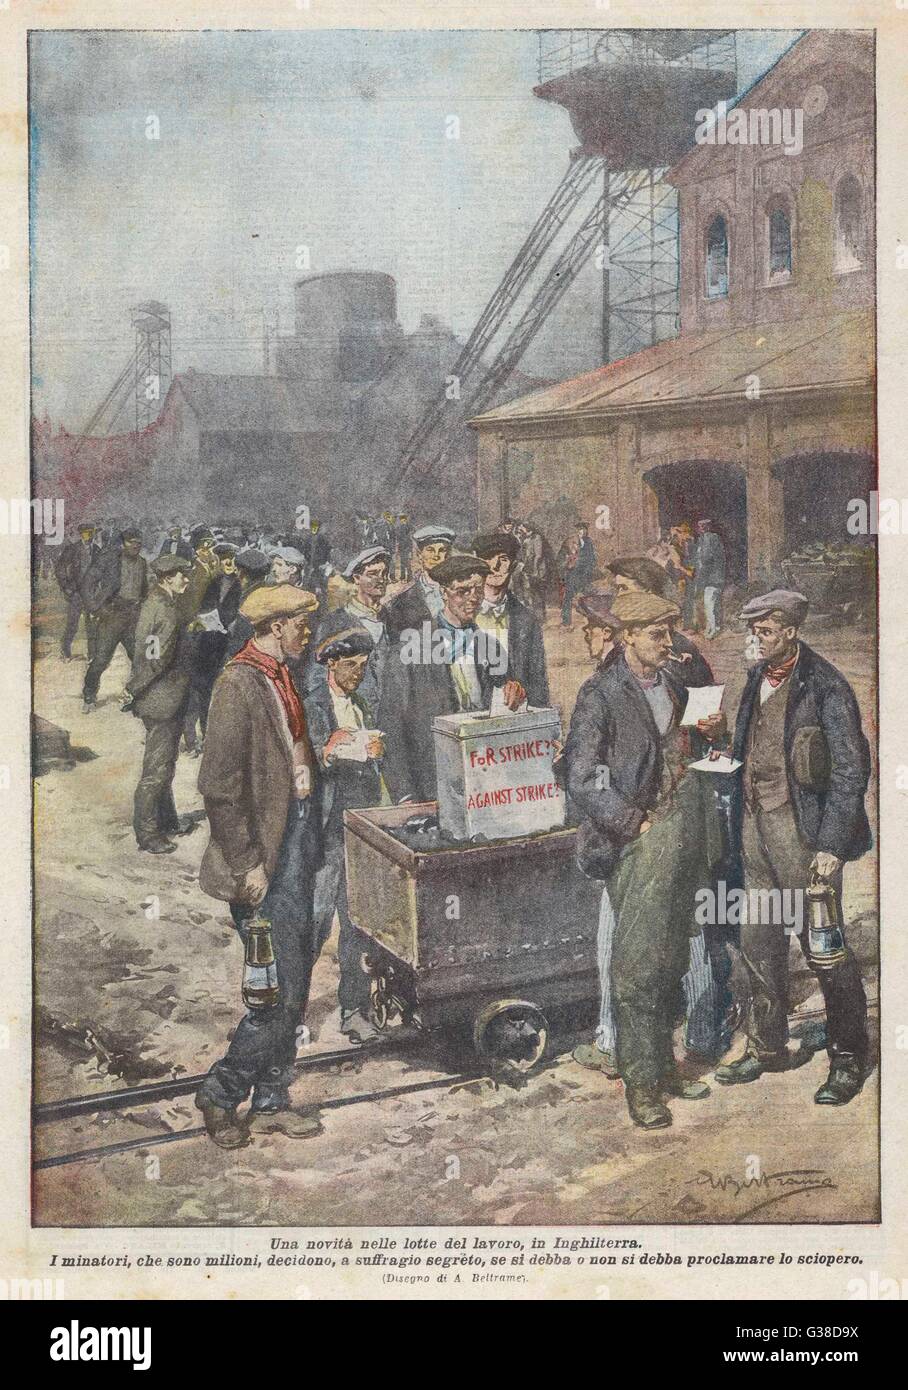 MINERS' STRIKE, 1920 Stock Photo